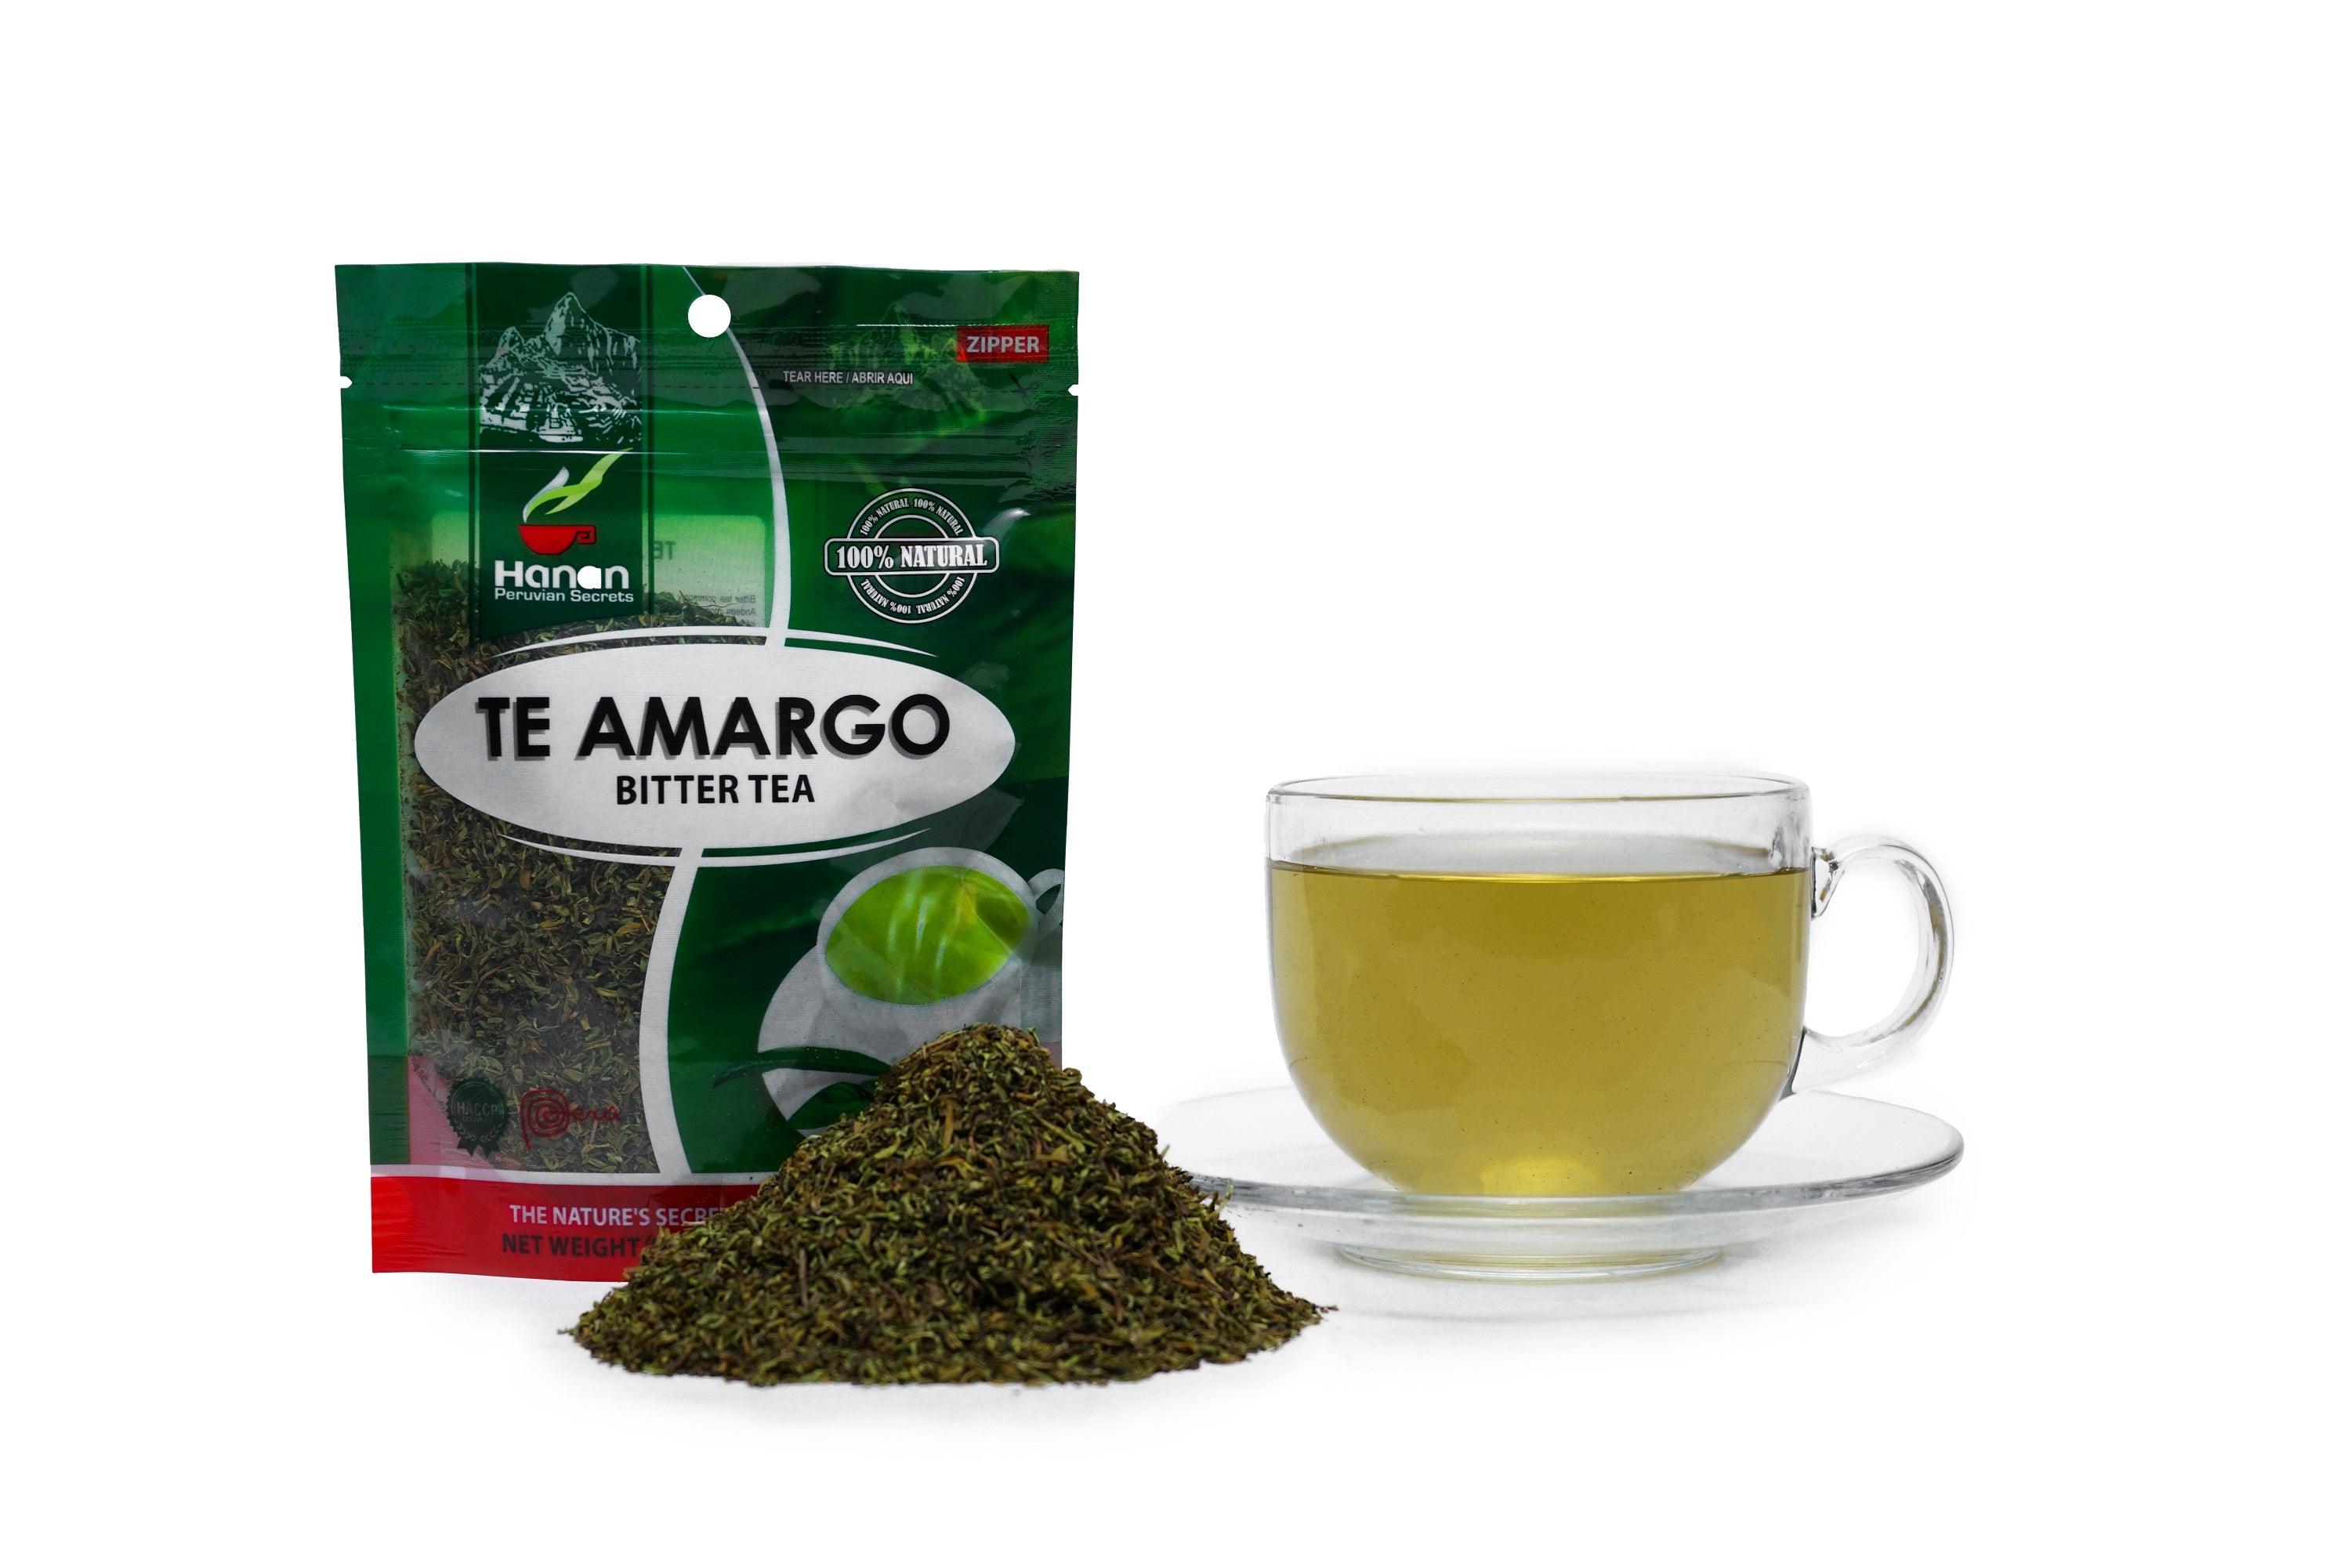 Te Amargo | Bitter Herbal Loose Leaf Tea | 1.41oz (40g)